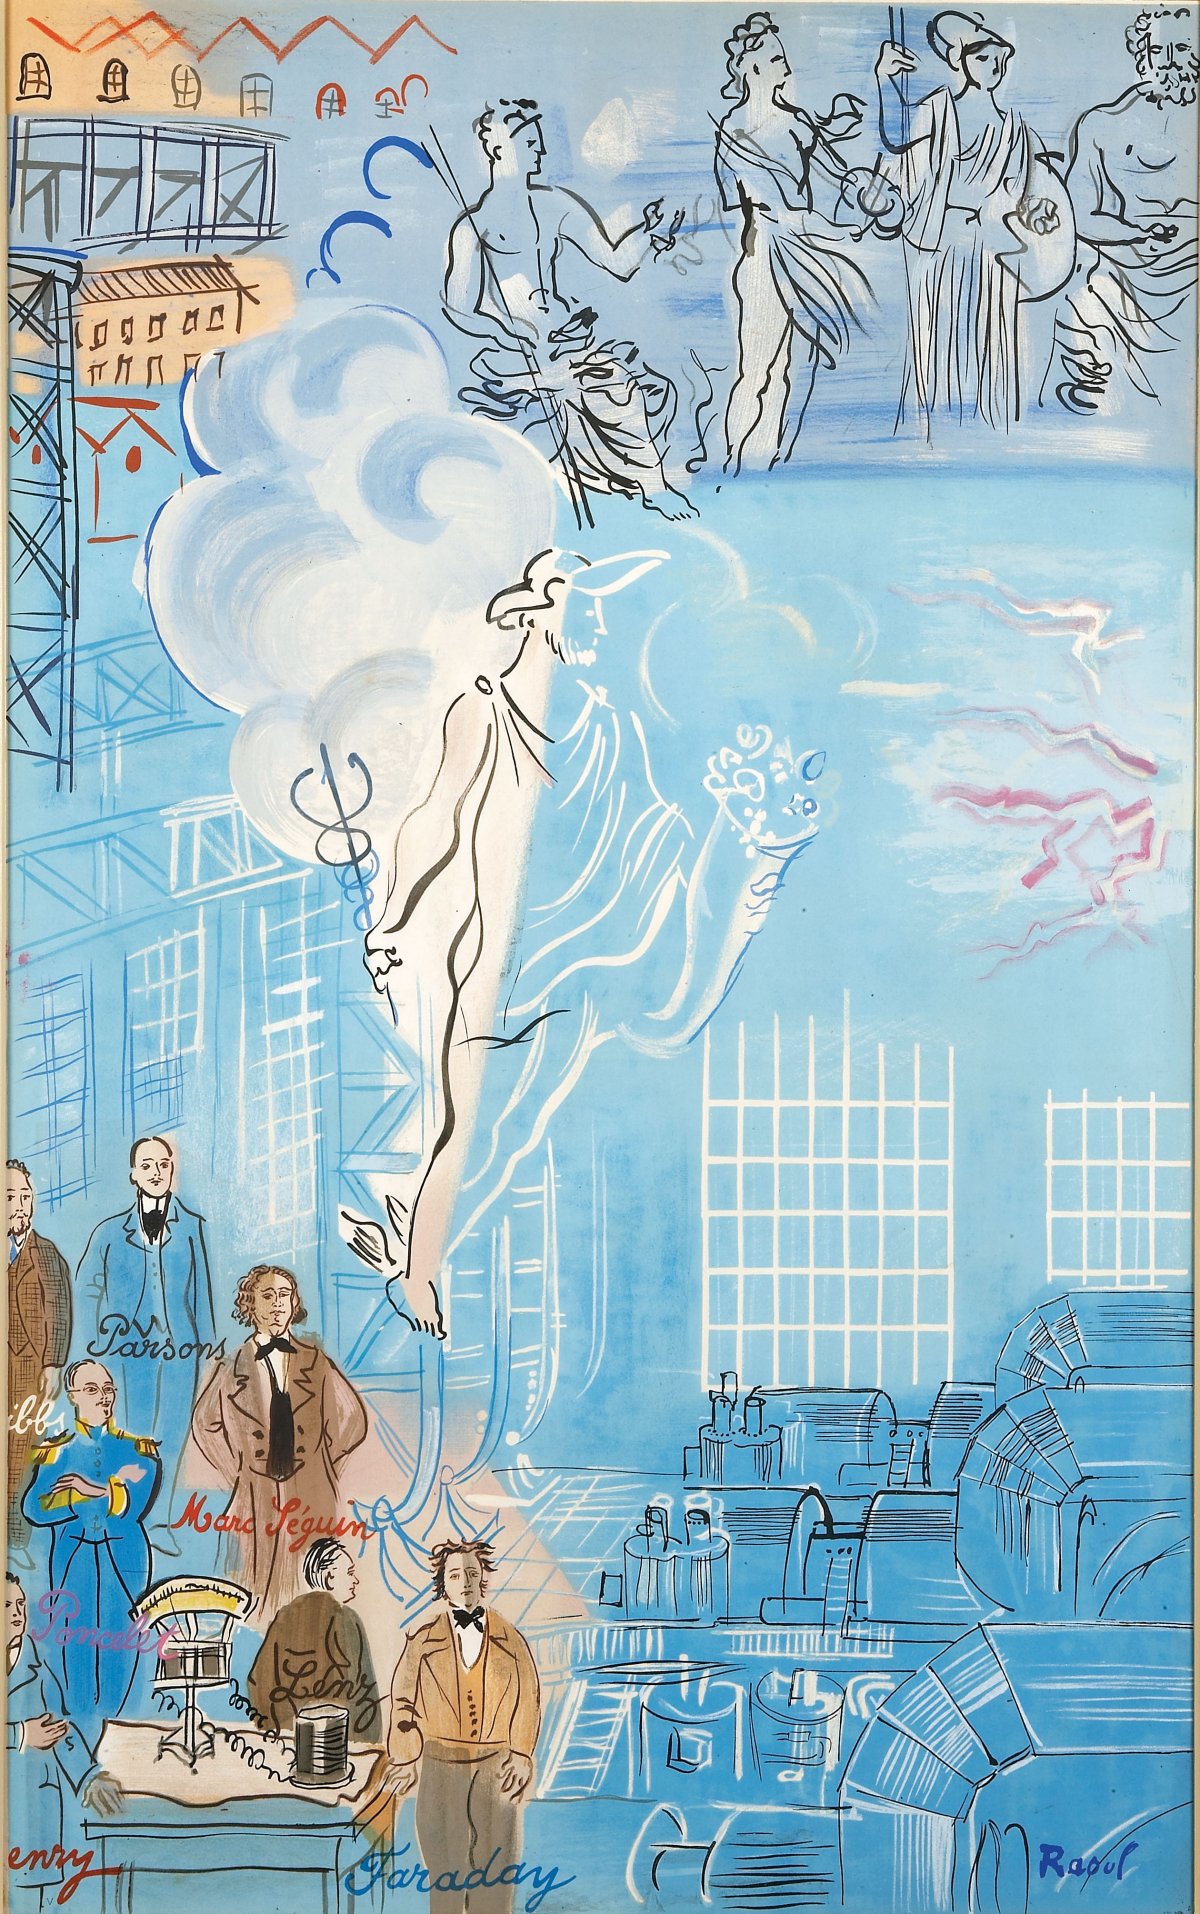 Raoul Dufy, La Fee Electricite V, 1953 